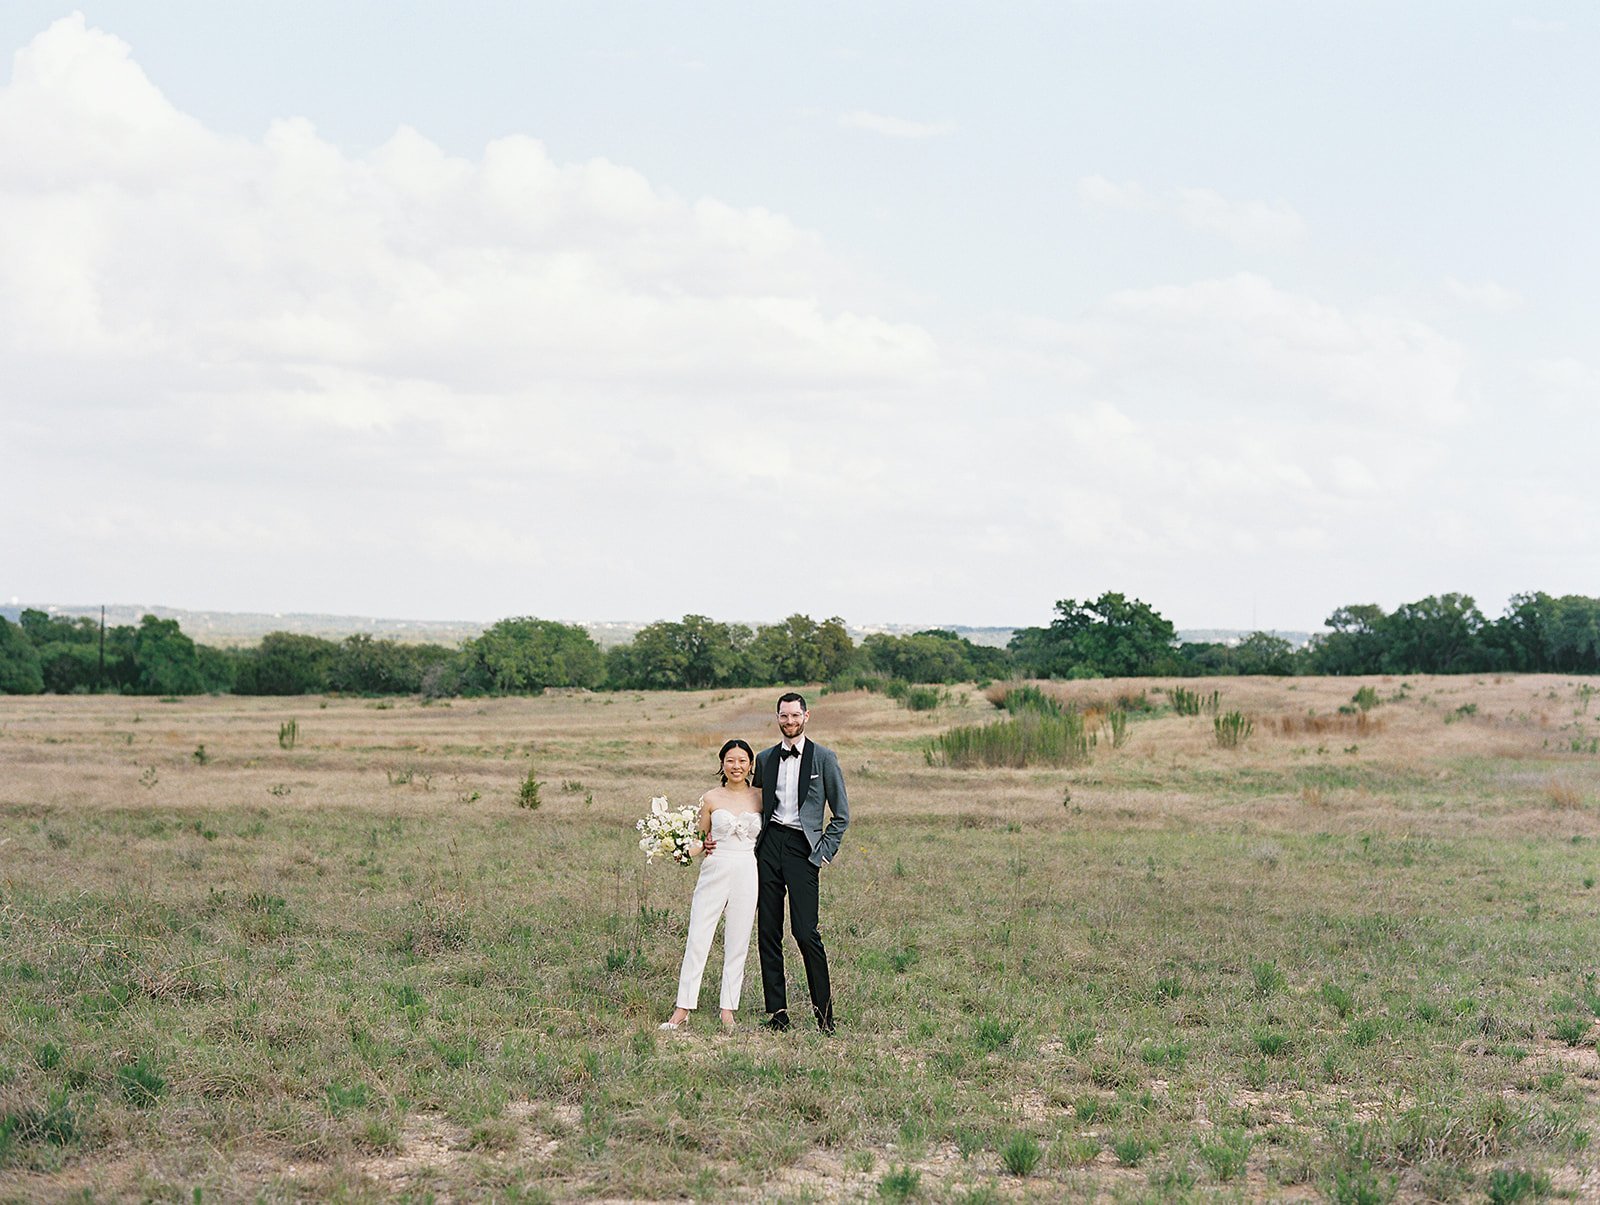 Best-Austin-Candid-Wedding-Photographers-Film-Documentary-35mm-Prospect-House-95.jpg